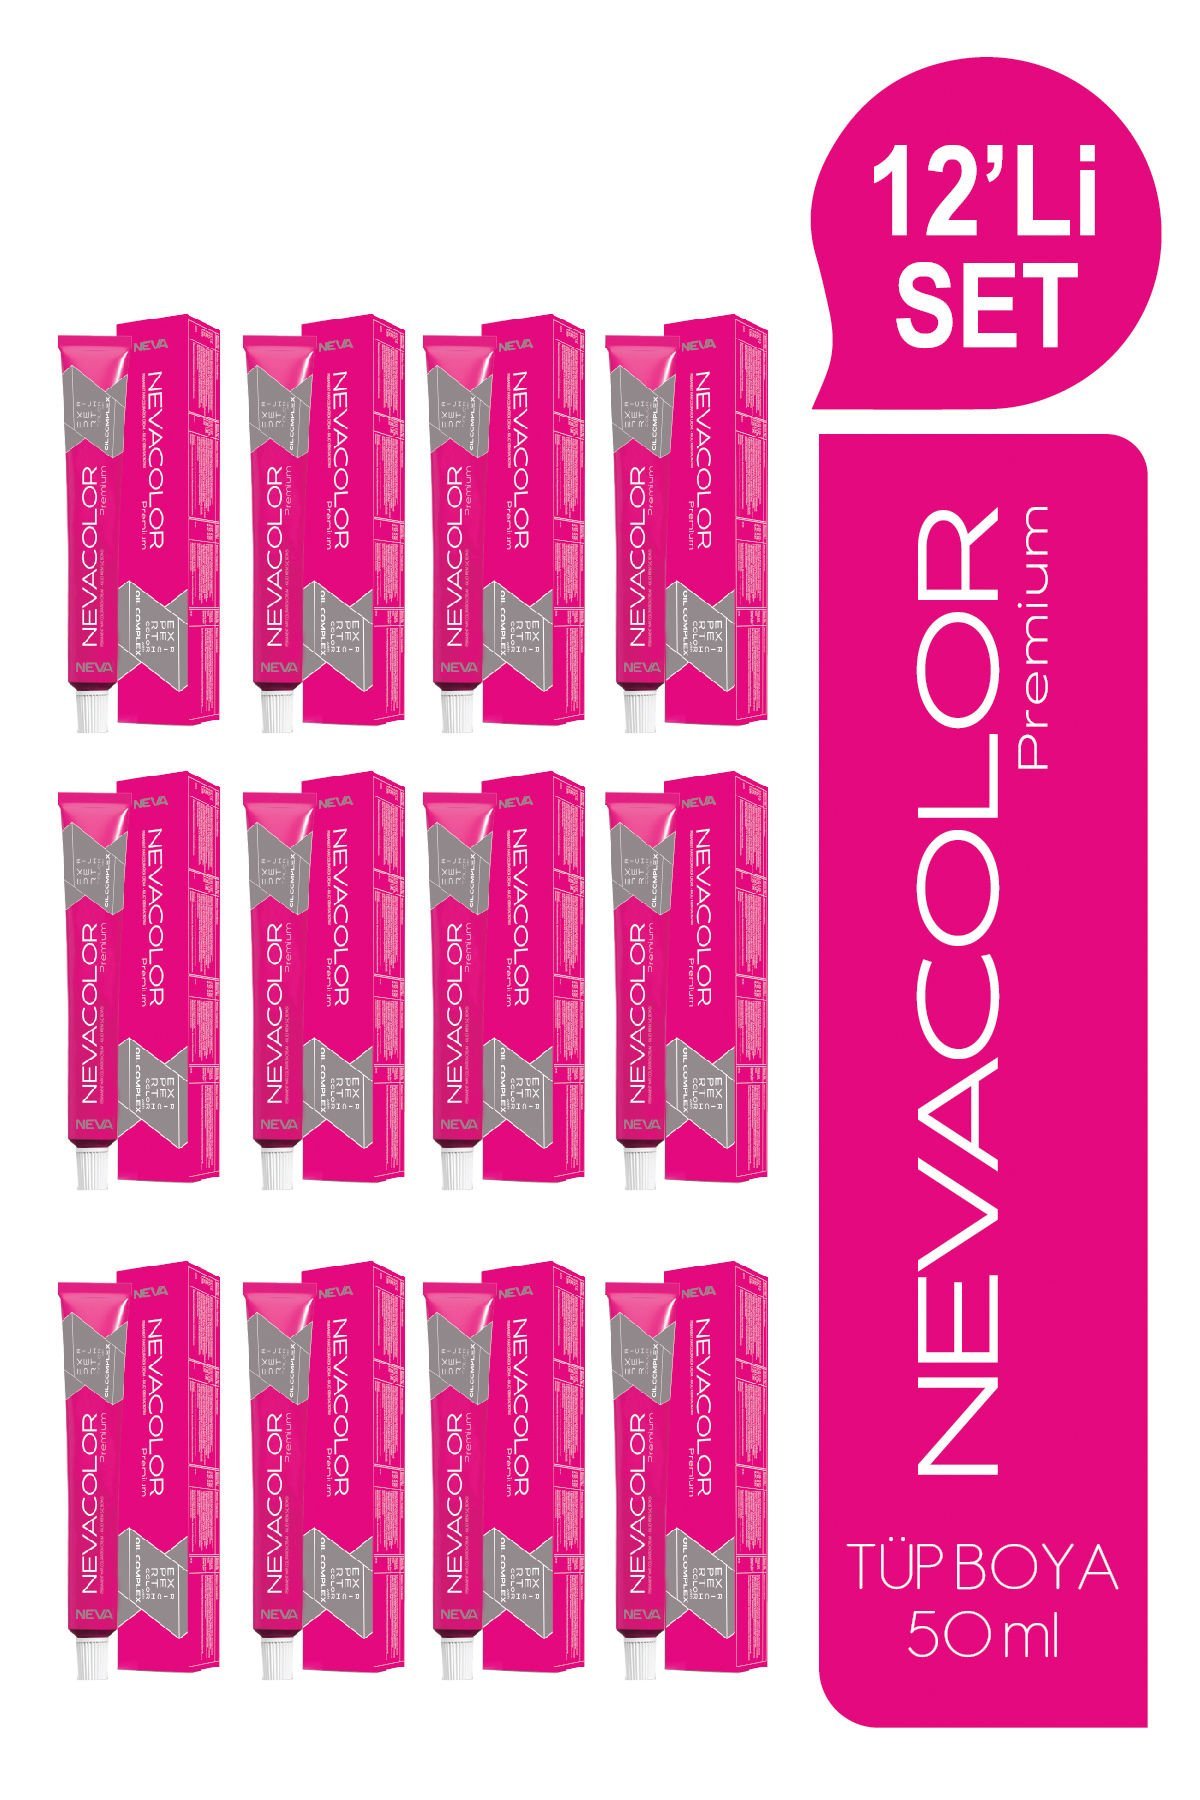 NEVACOLOR Premium 12'Lİ SET  7.66 AŞK ALEVİ Kalıcı Krem Saç Boyası (50ml x 12 adet)